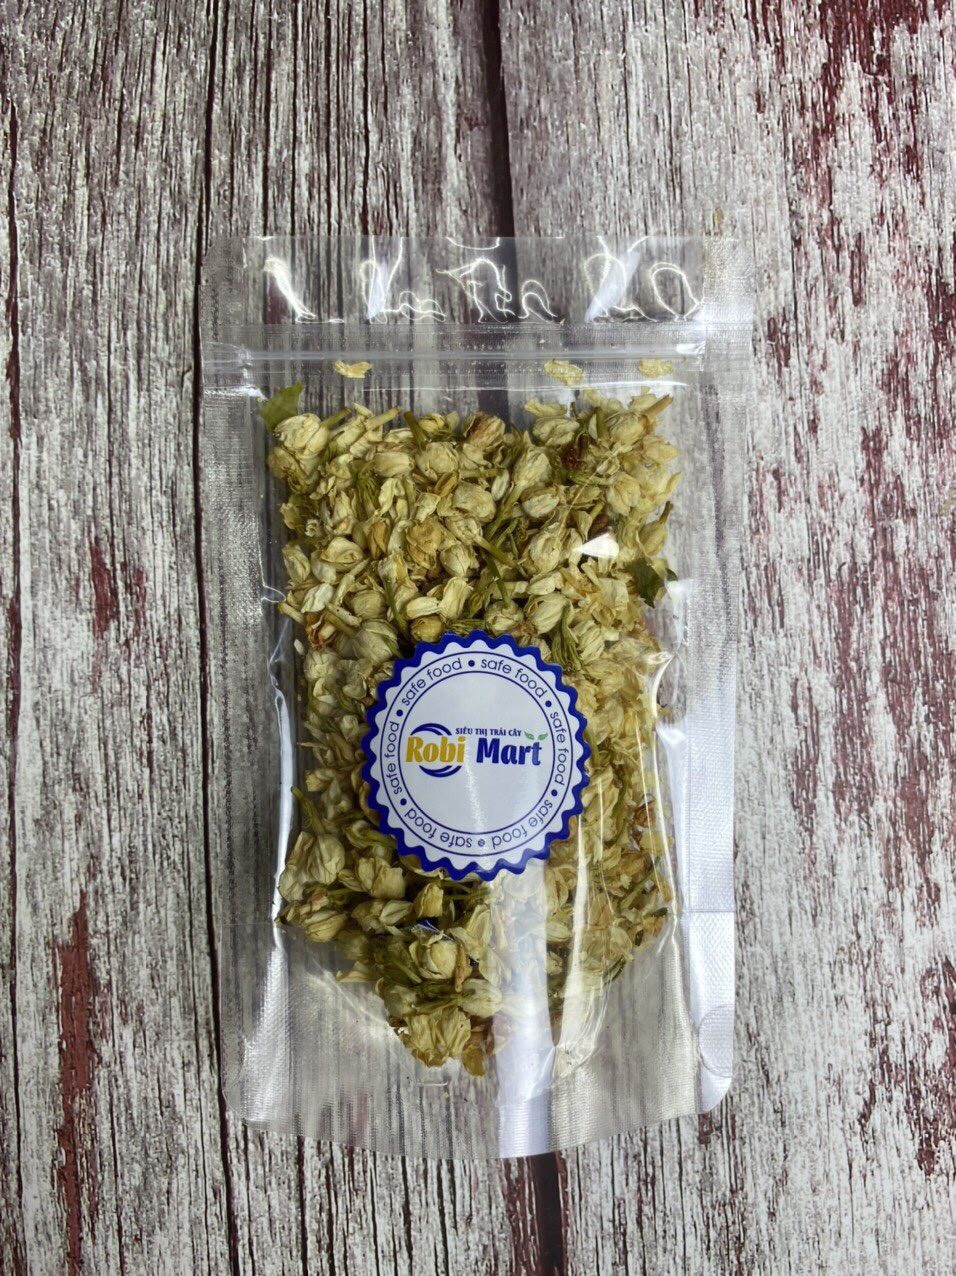 HCMC jasmine tea jasmine tea-50g herbal yellow jasmine tea for wholesale